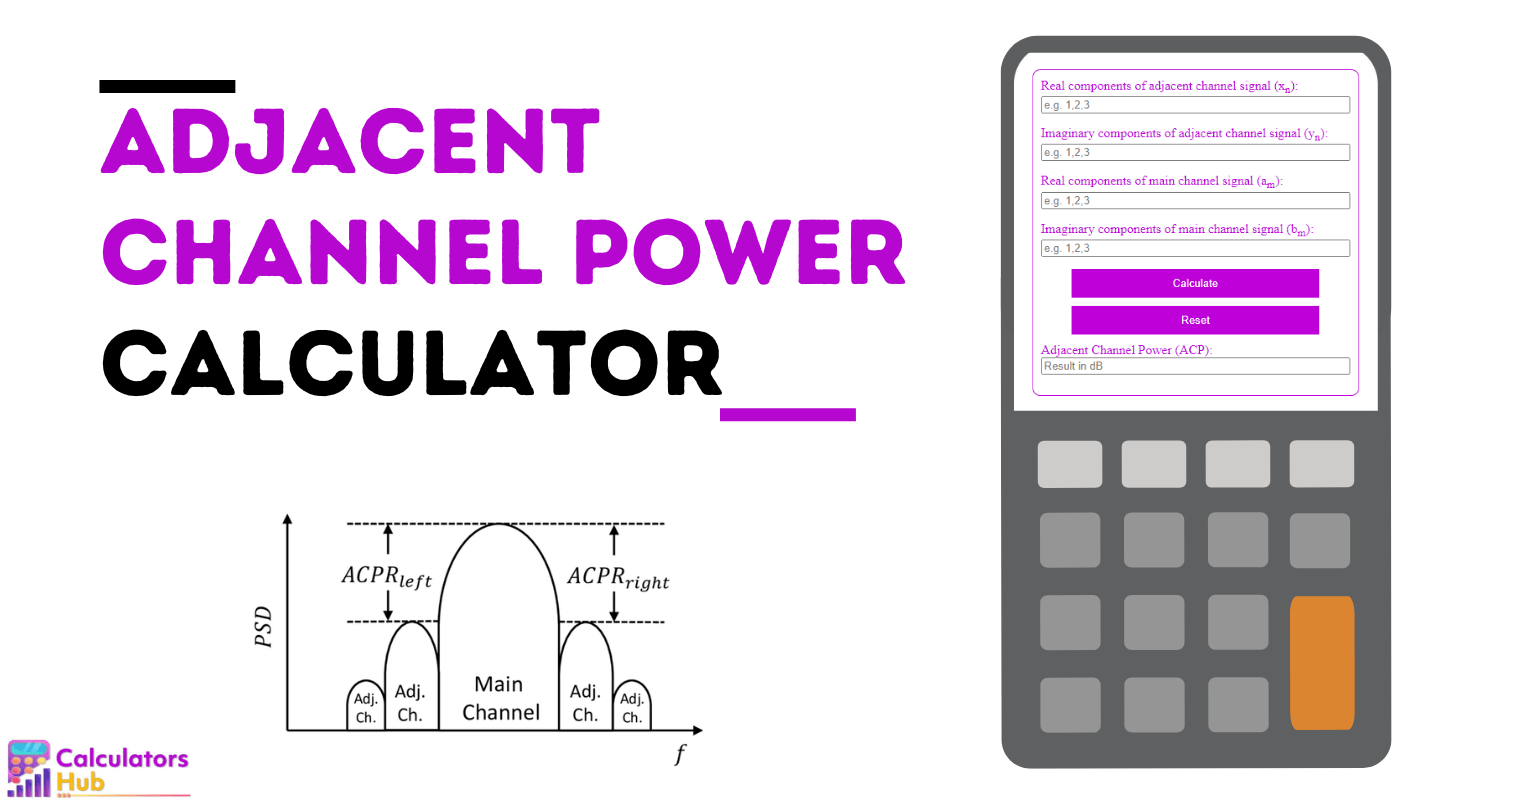 Adjacent Channel Power Calculator